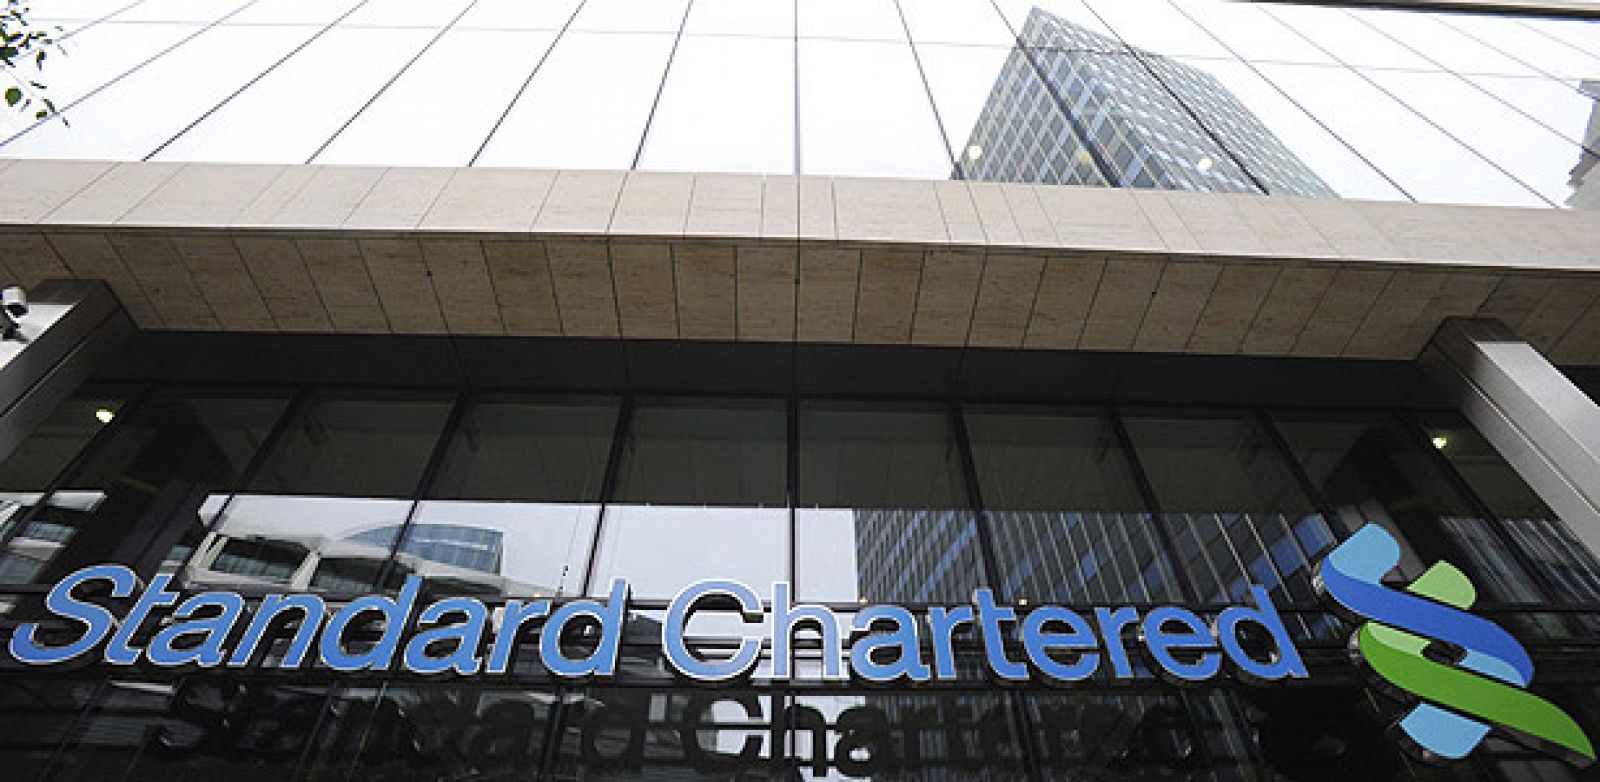 La sede londinense del Standard Chartered bank